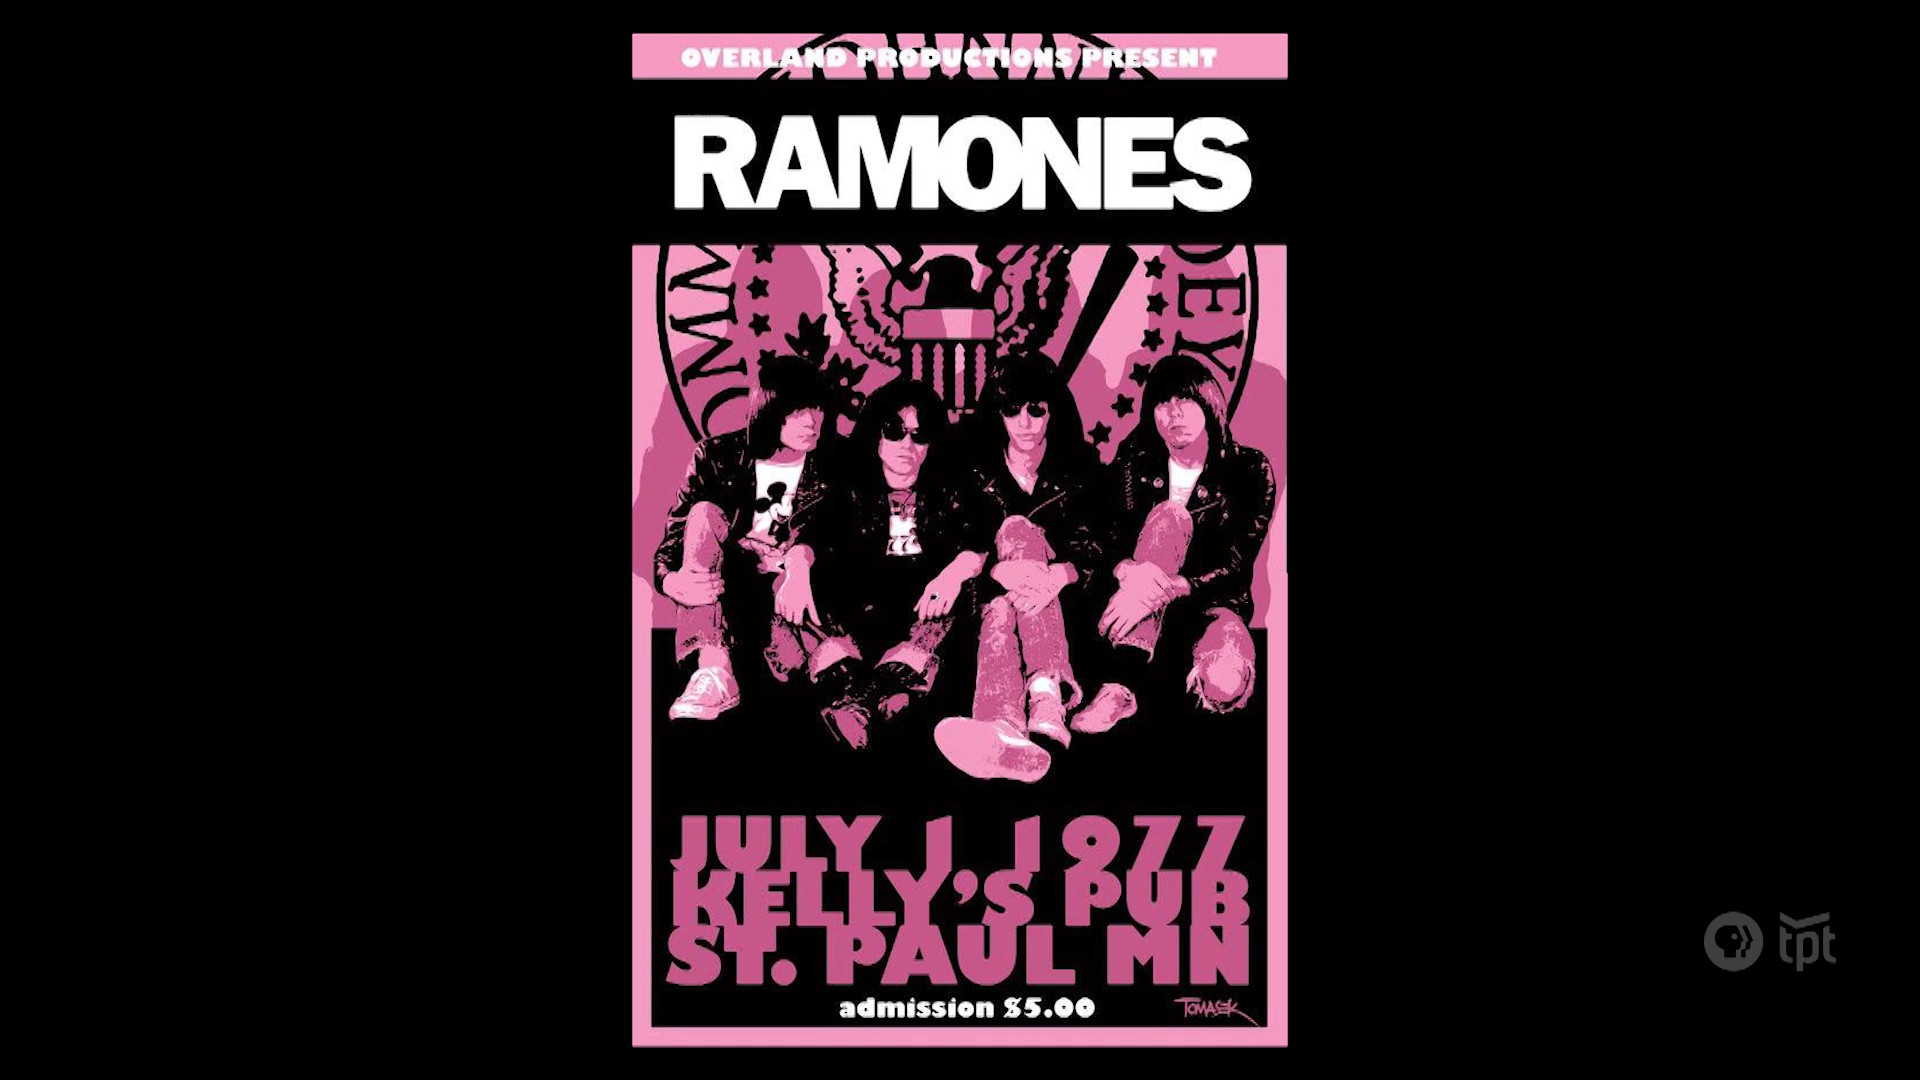 1920x1080 Minnesota Music History: St. Paul Inspires The Ramones